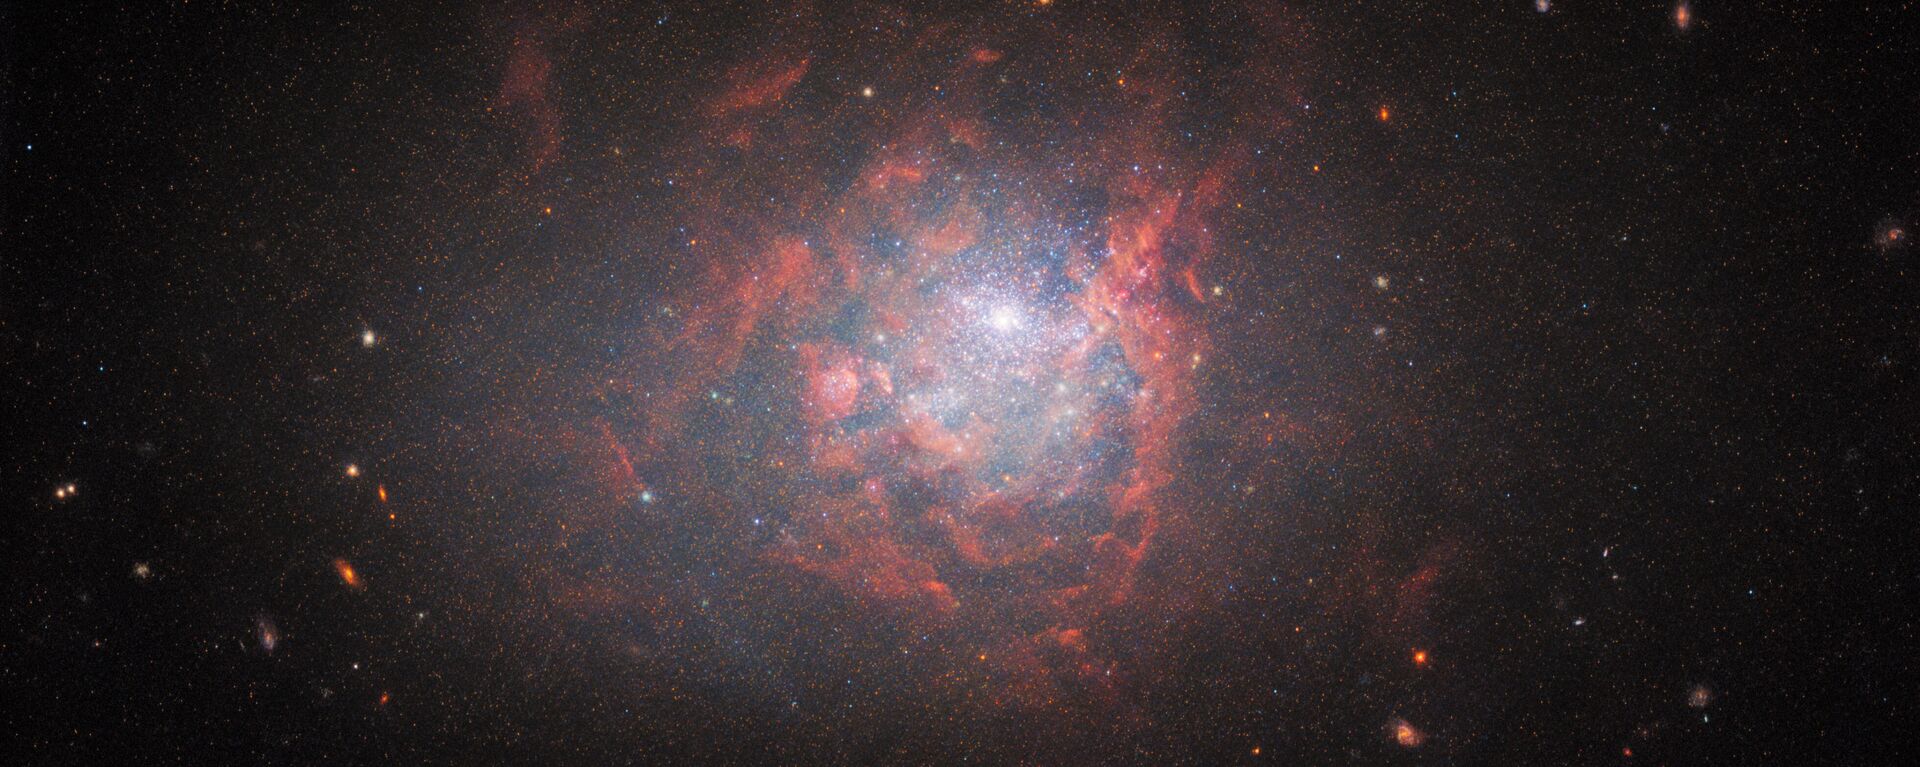 Registro da galáxia anã NGC 1705 feito pelo telescópio Hubble da NASA/ESA - Sputnik Brasil, 1920, 01.02.2022